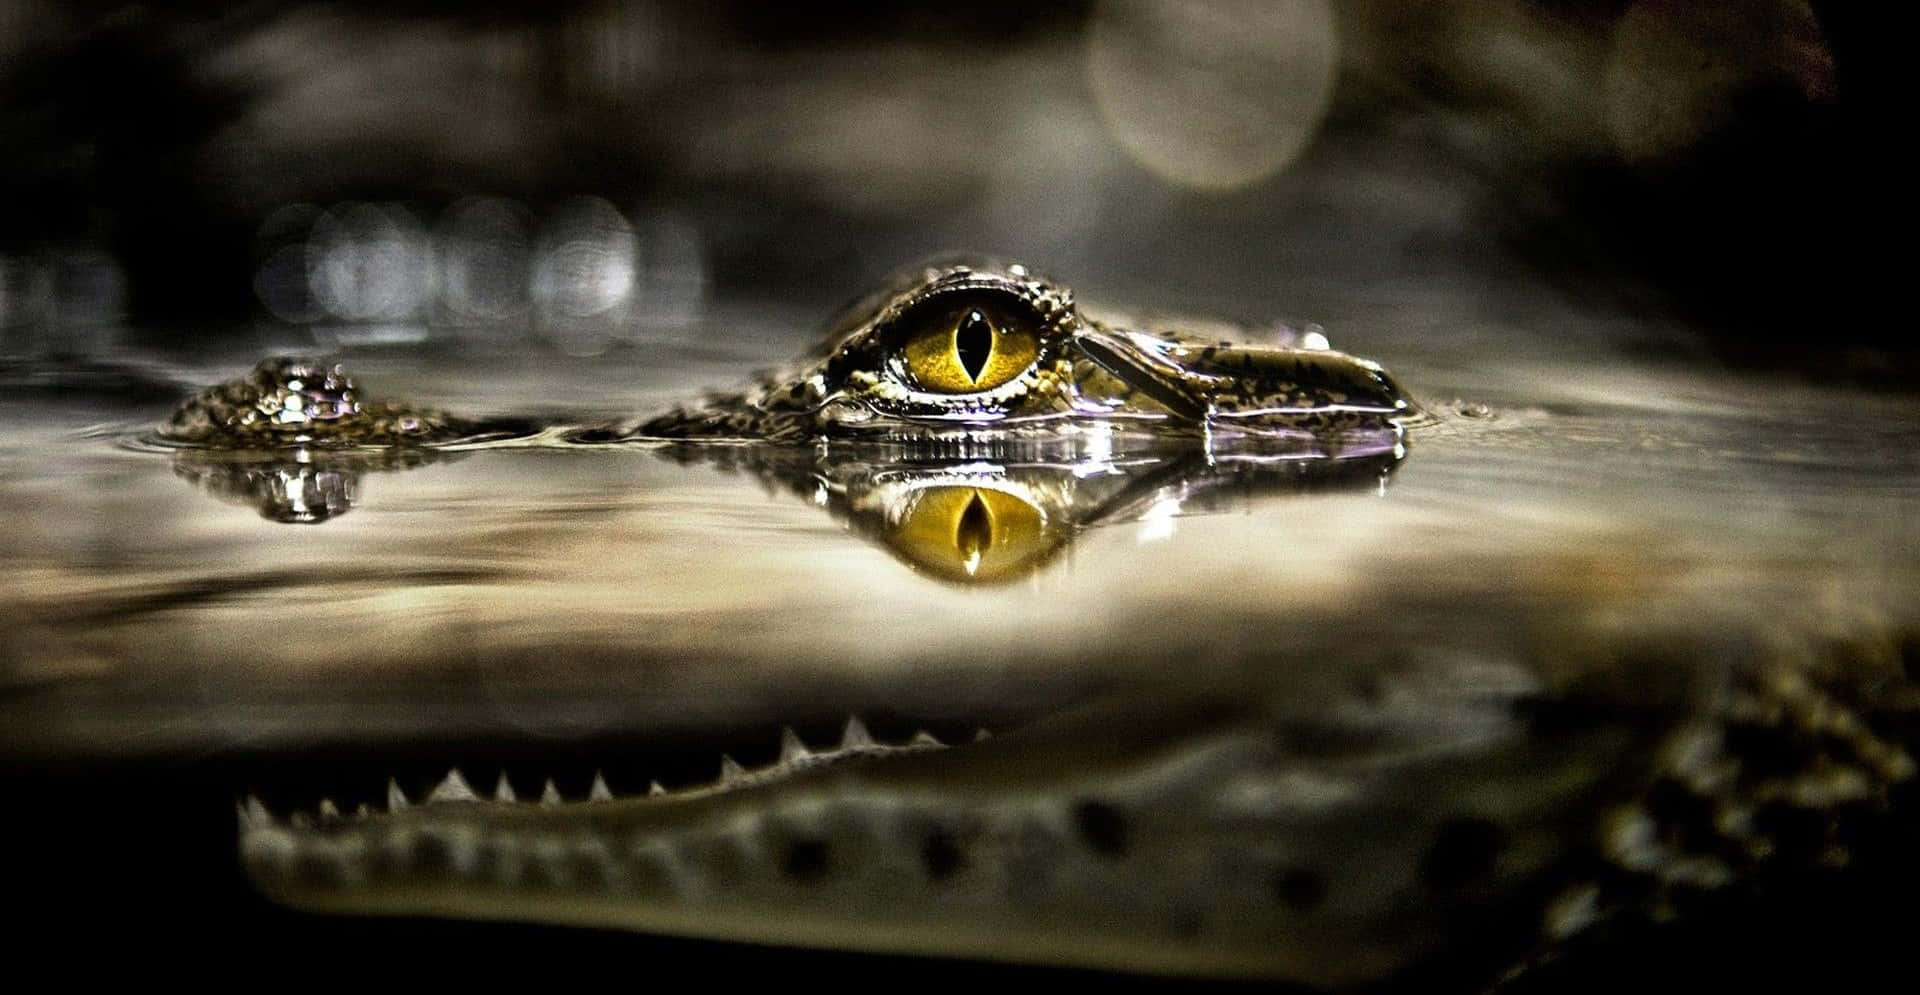 Cool Green Eye Crocodile Picture